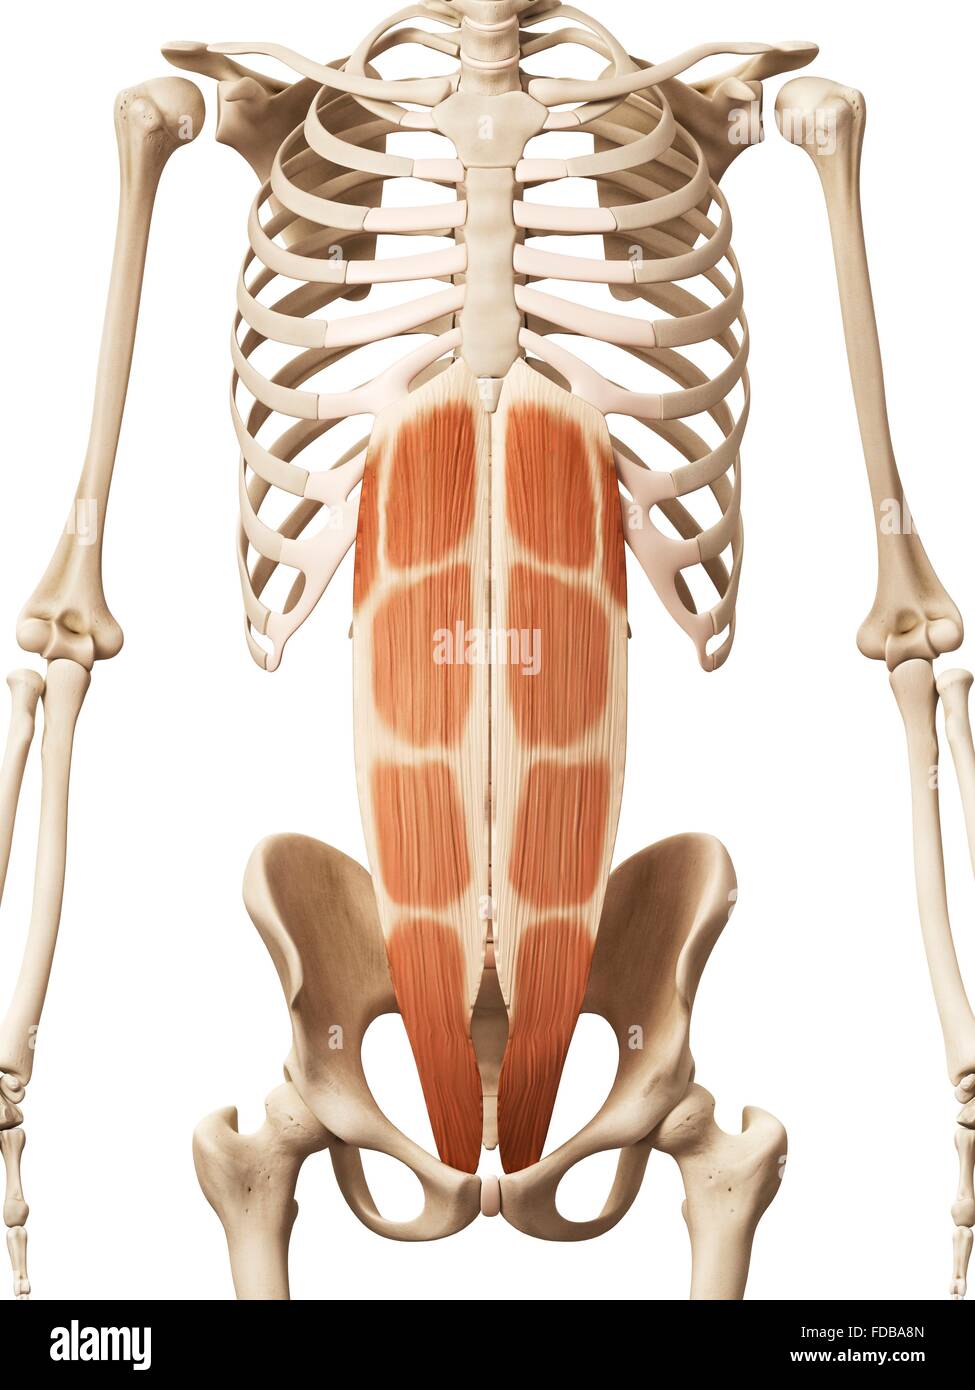 Human abdominal muscles (rectus abdominis), illustration. Stock Photo